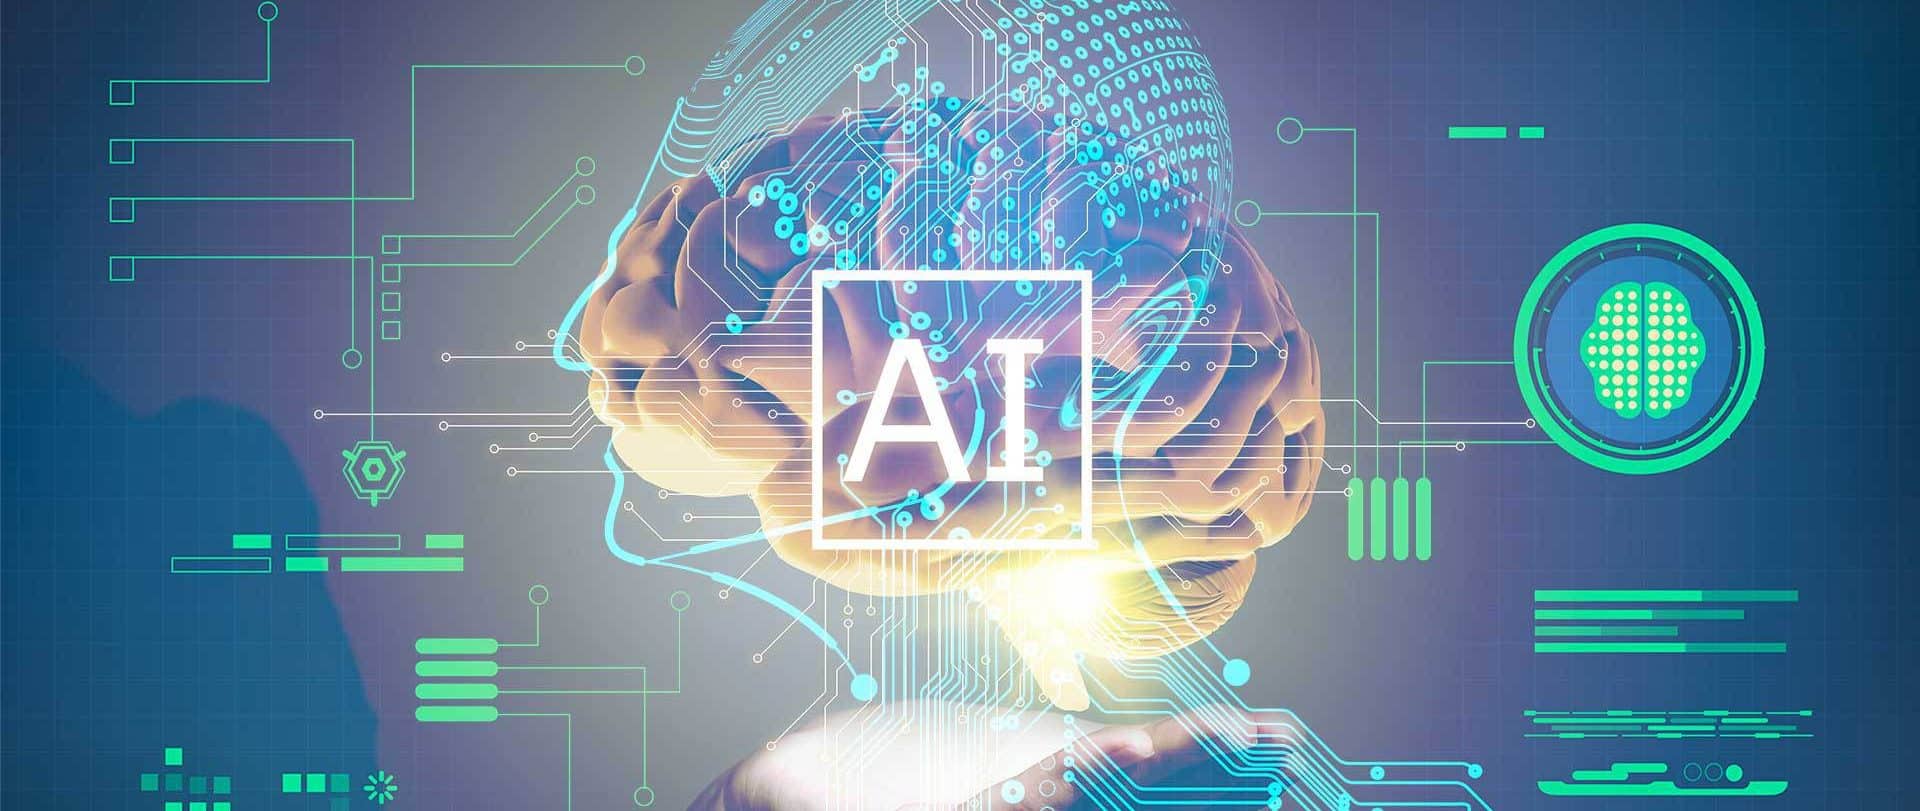 AI e1524465877505 5 خرافاتٍ التصقت بالذكاء الصناعي AI مجلة نقطة العلمية